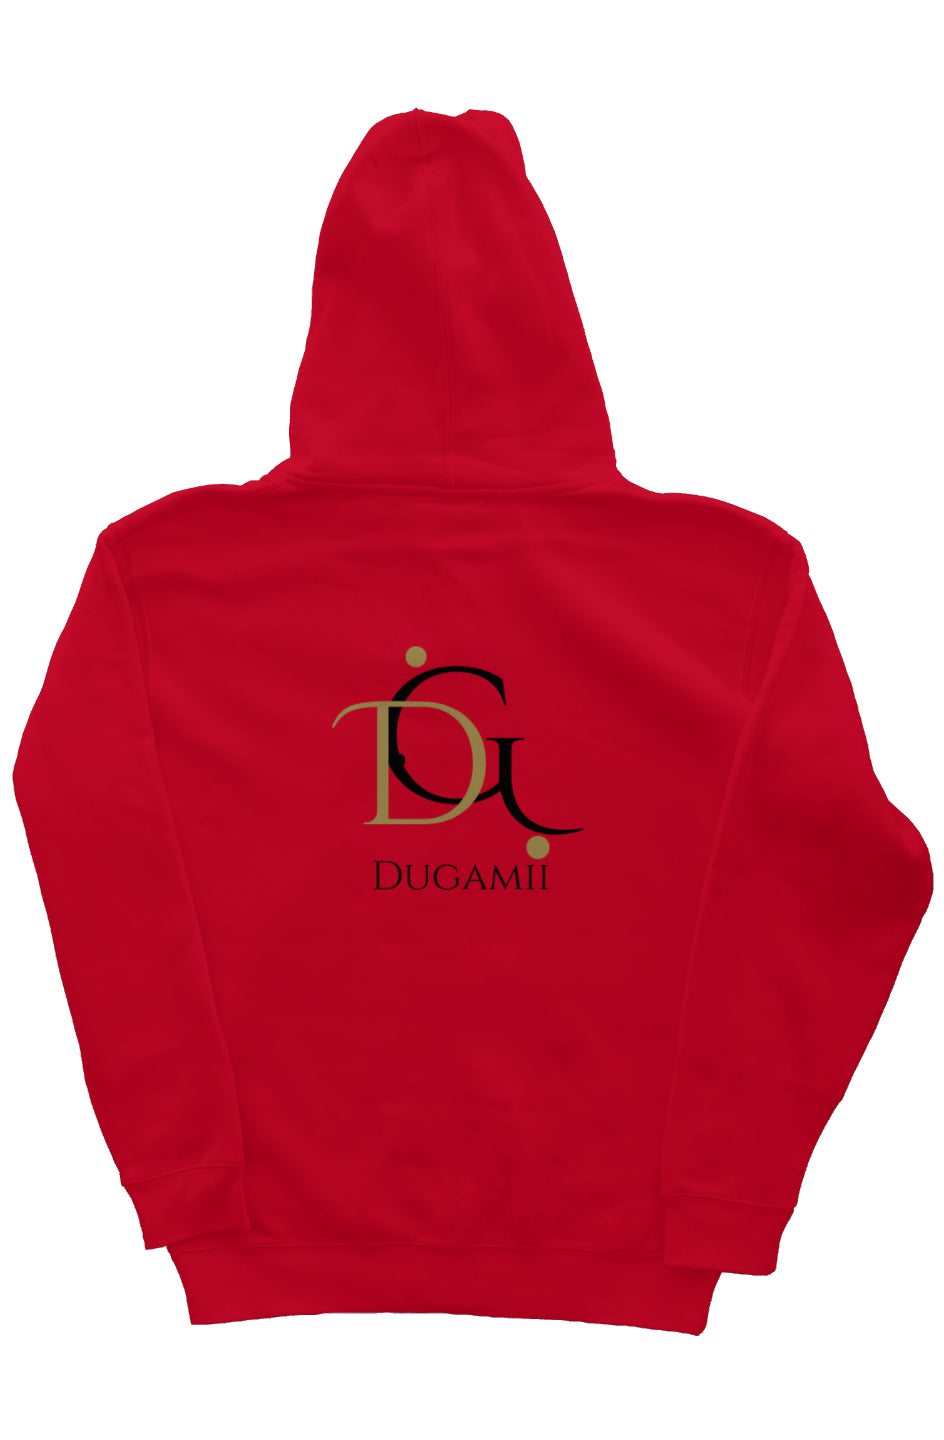 Dugamii Classic Red Zip Hoodie